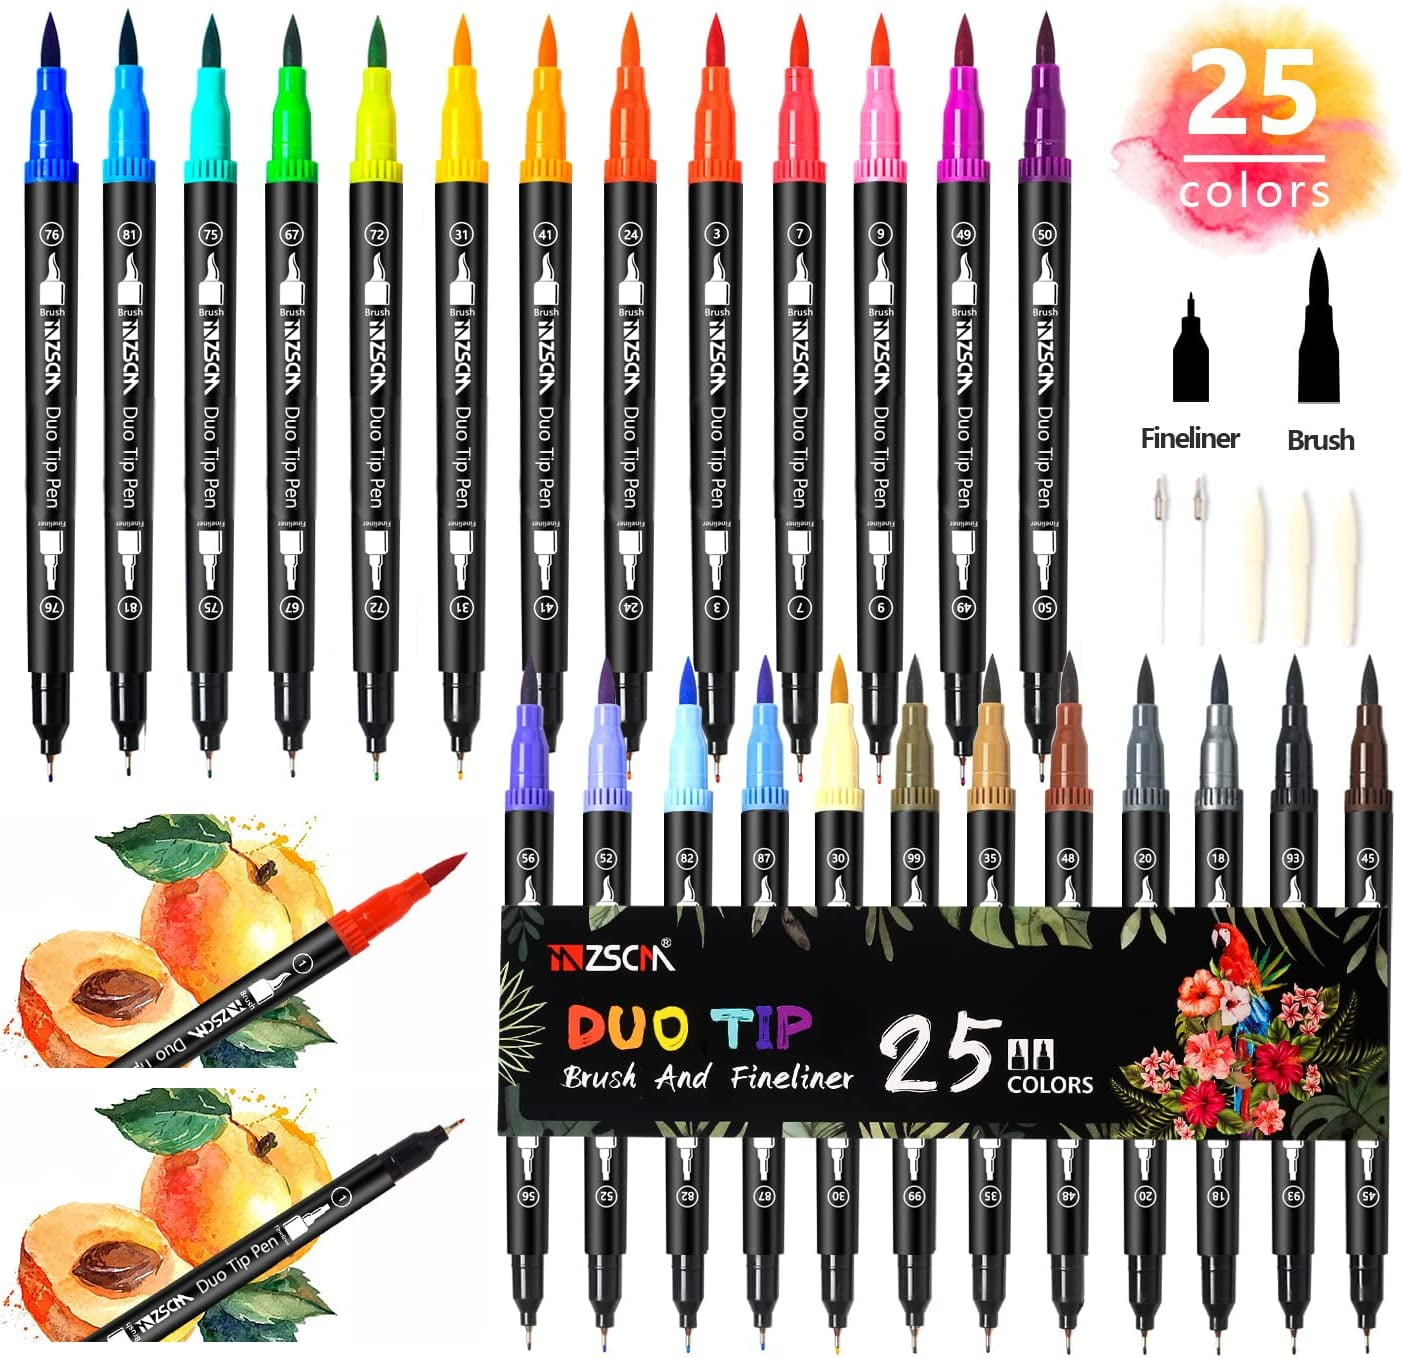 MODANU 24 Colors Brush Pens Art Markers Set, Fine and Brush Tip Colored  Dual Pen for Kid Adult Coloring Book Drawing Bullet Journal Planner  Calendar